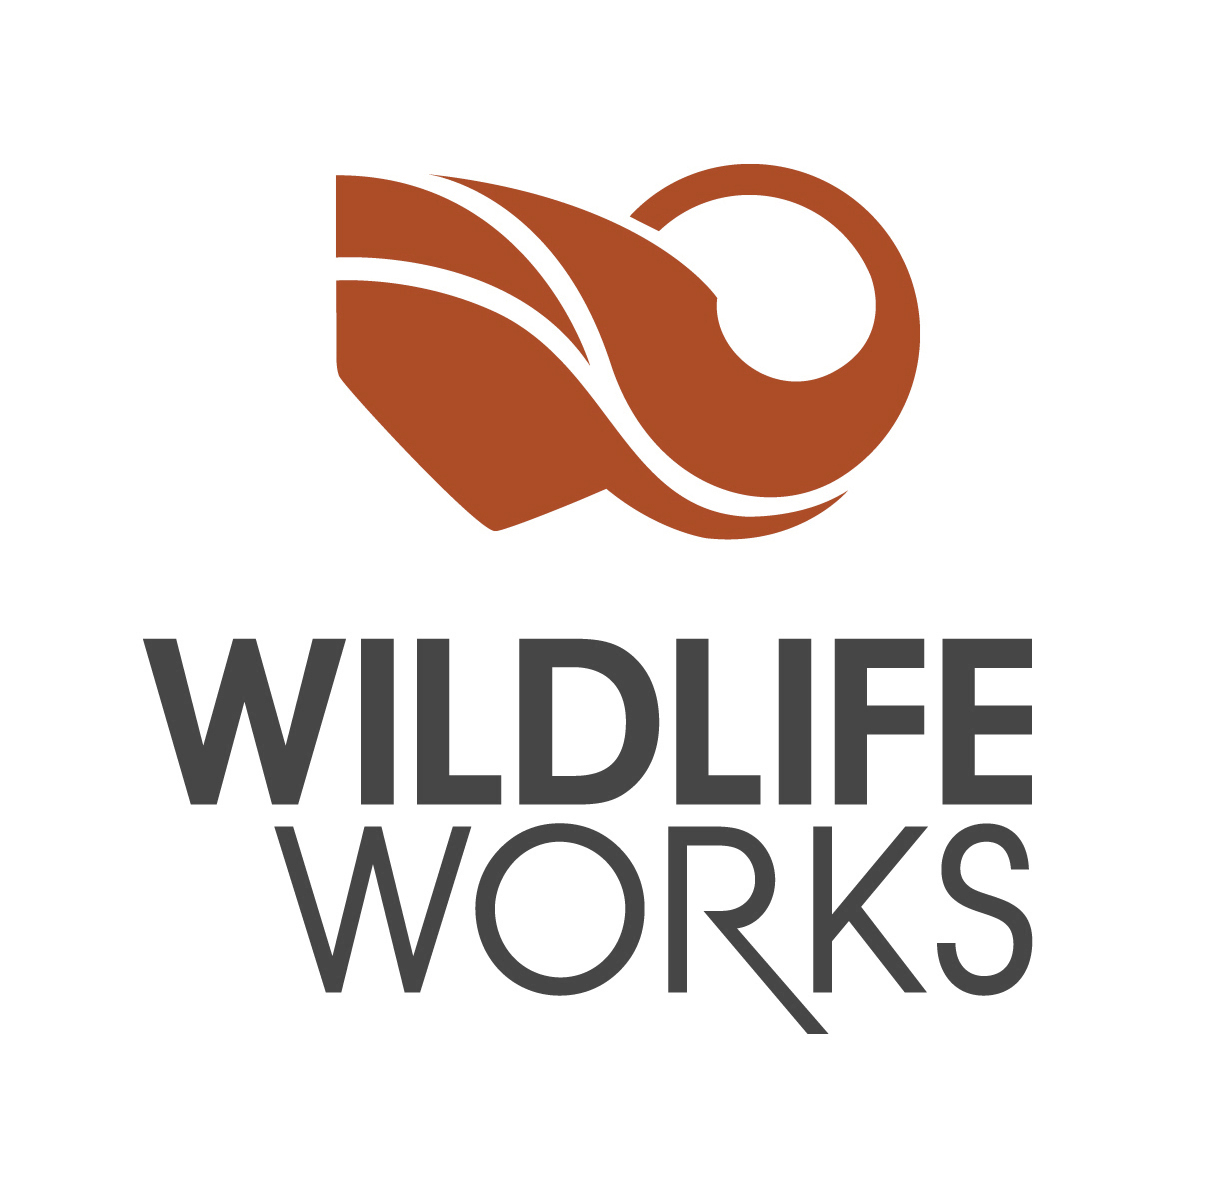 Linked logo for Wildlife Works